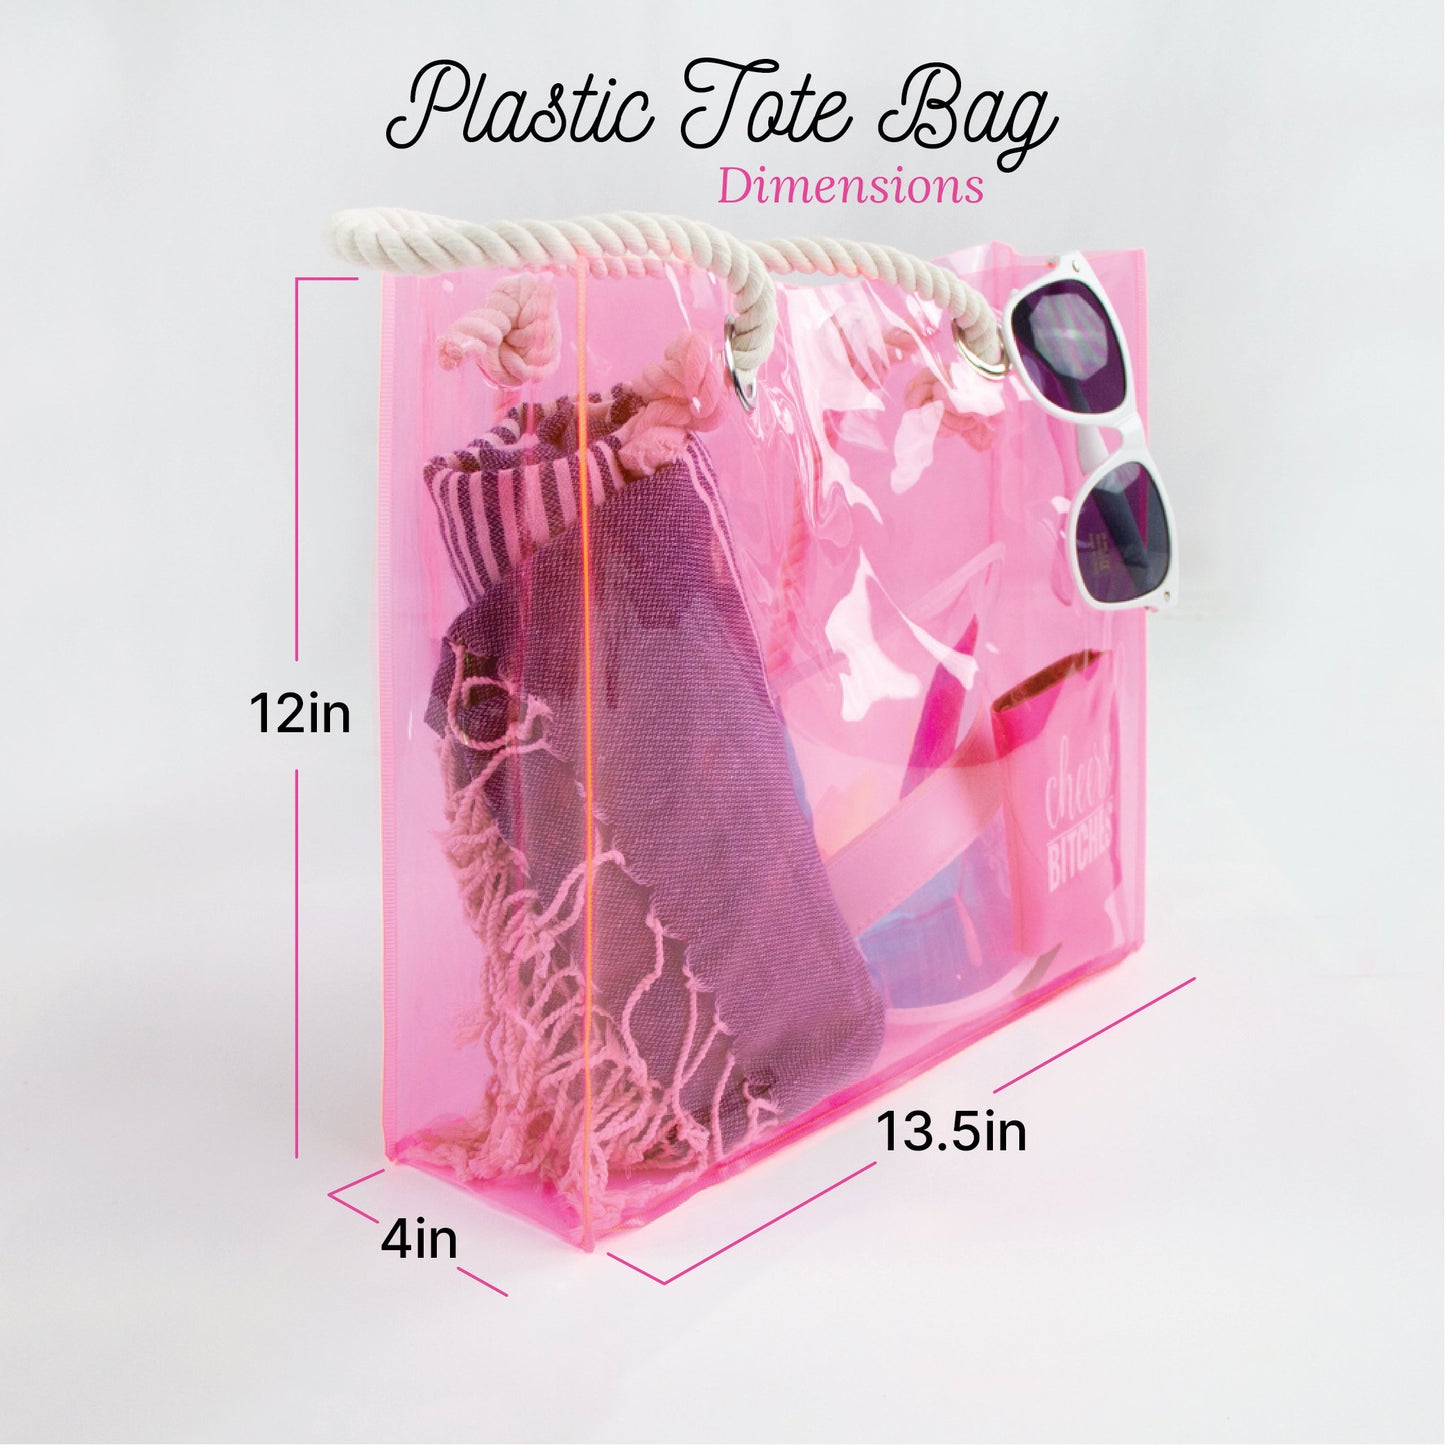 Custom Bride Bachelorette Party Tote Bag - Personalized Neon Transparent